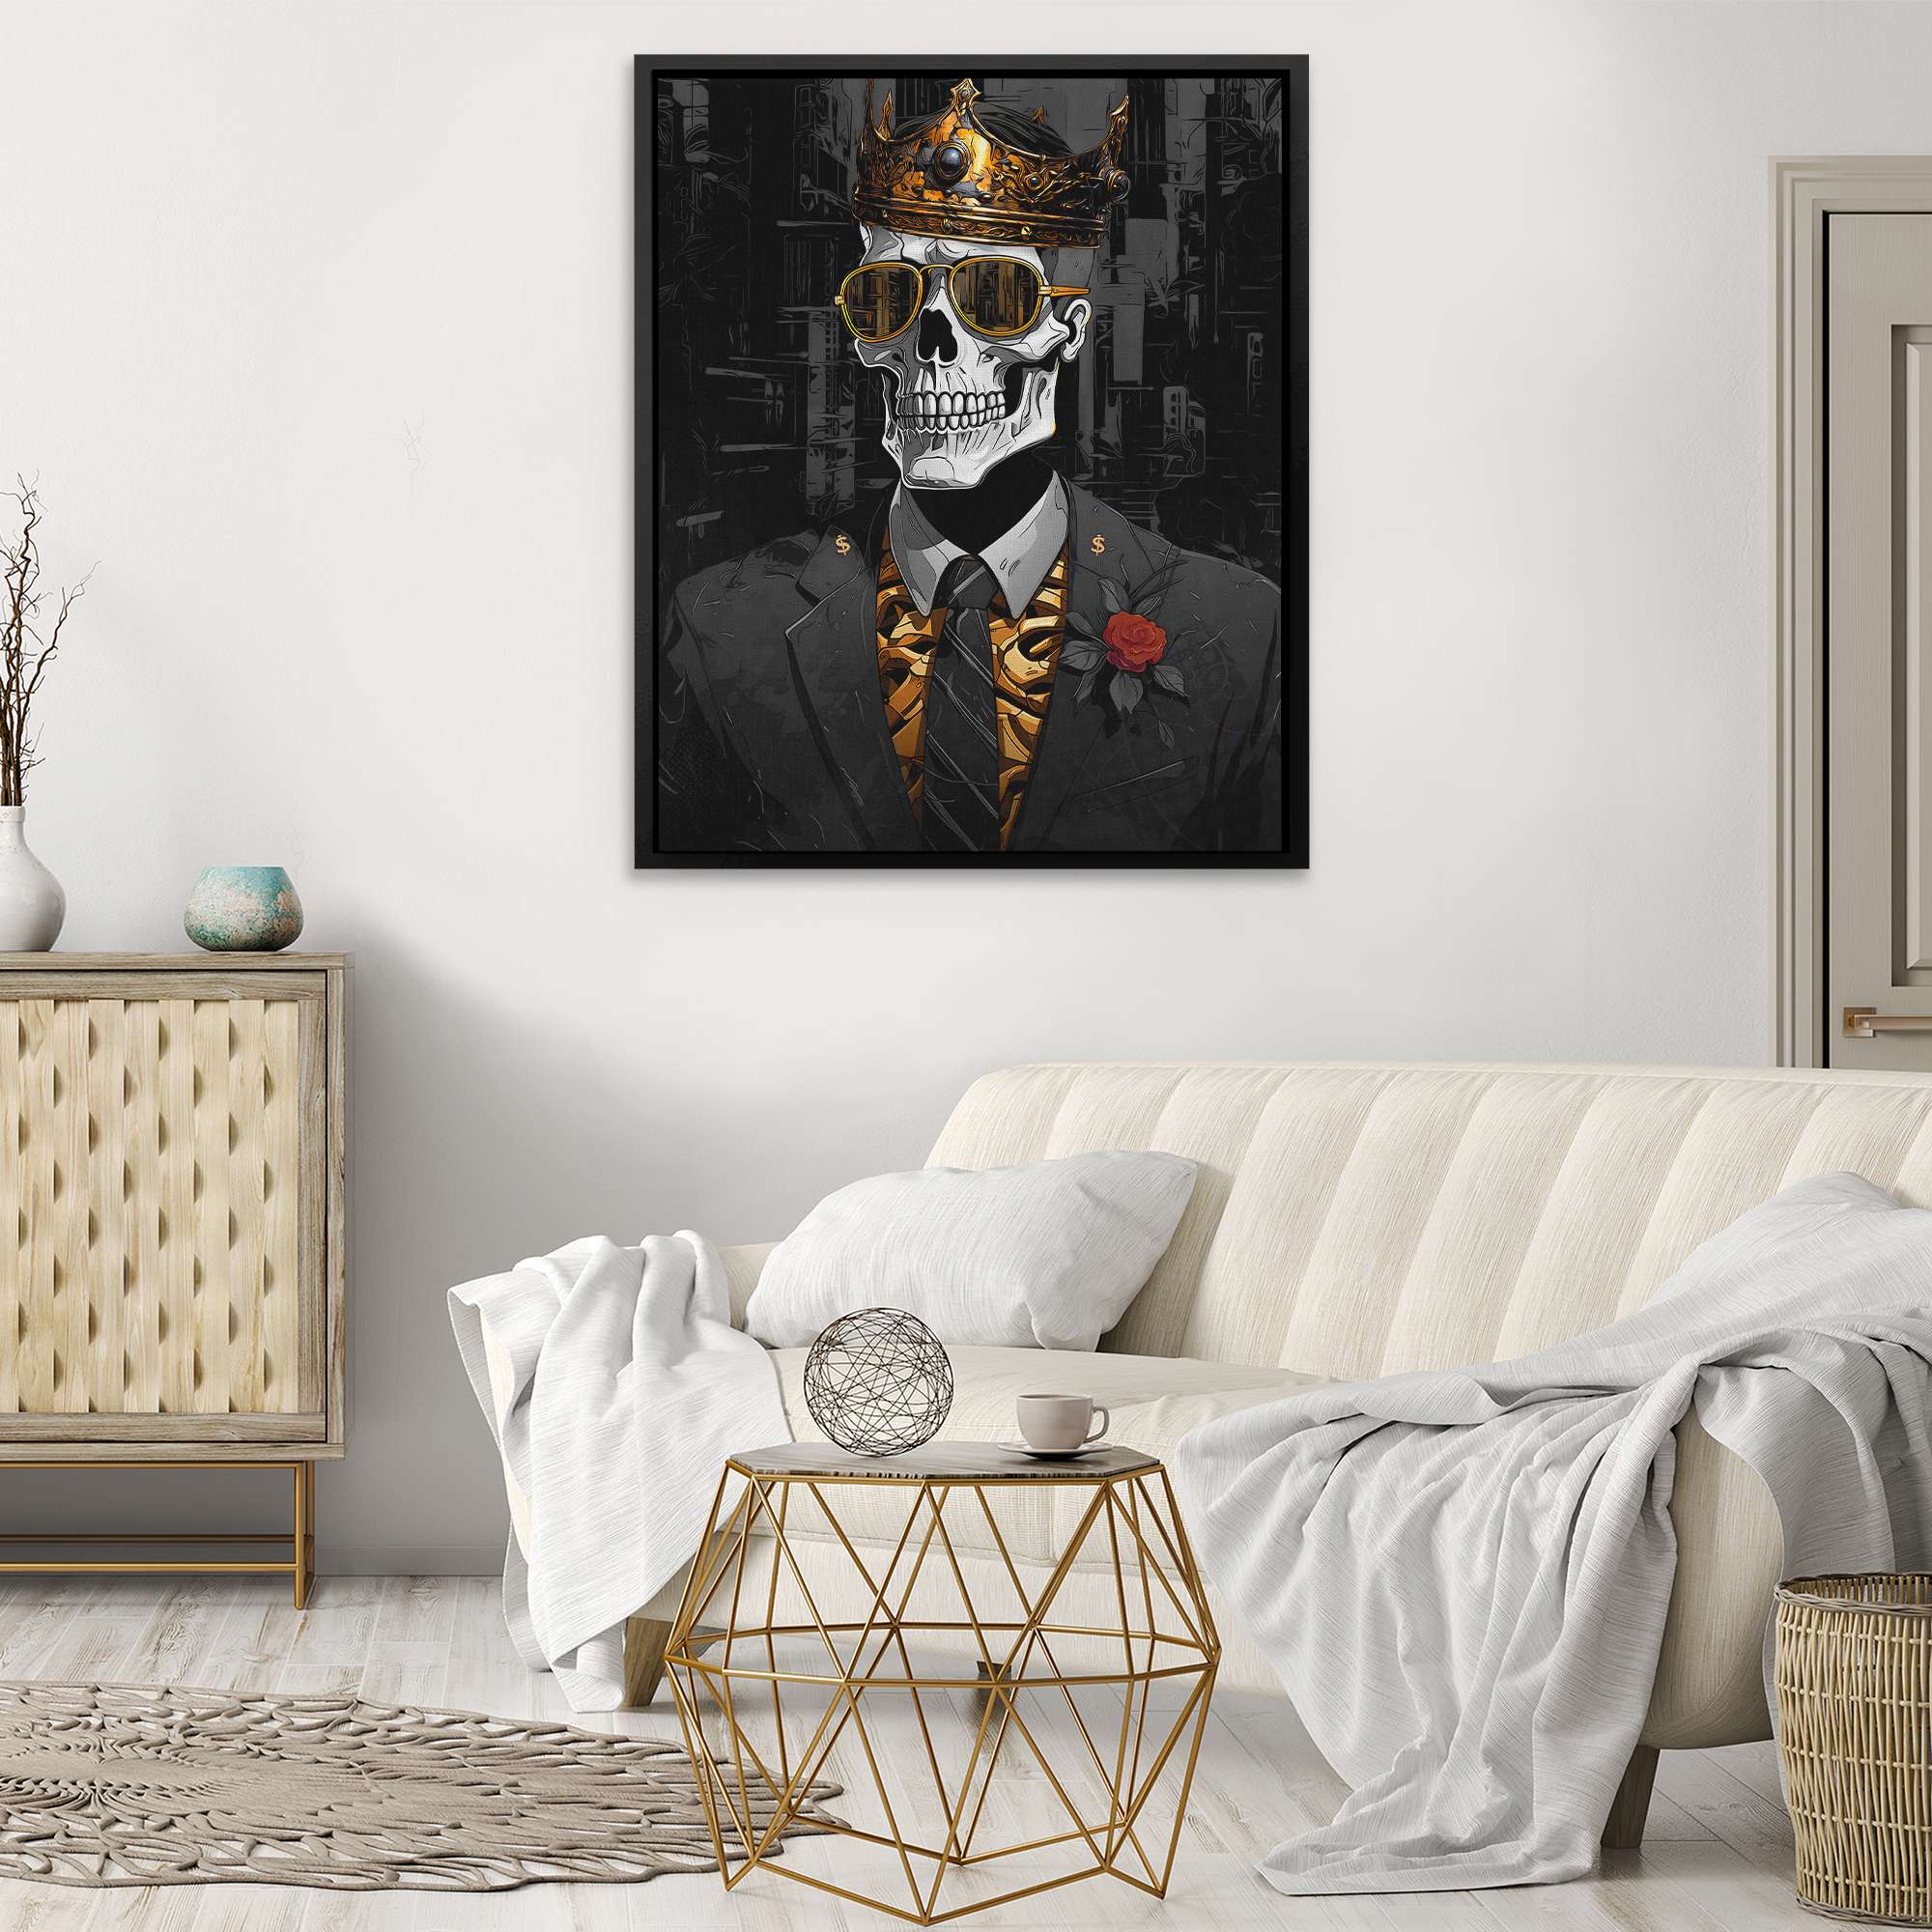 Midas Touch Skull King - Macabre Art - Midas King Gold Skull - Thedopeart